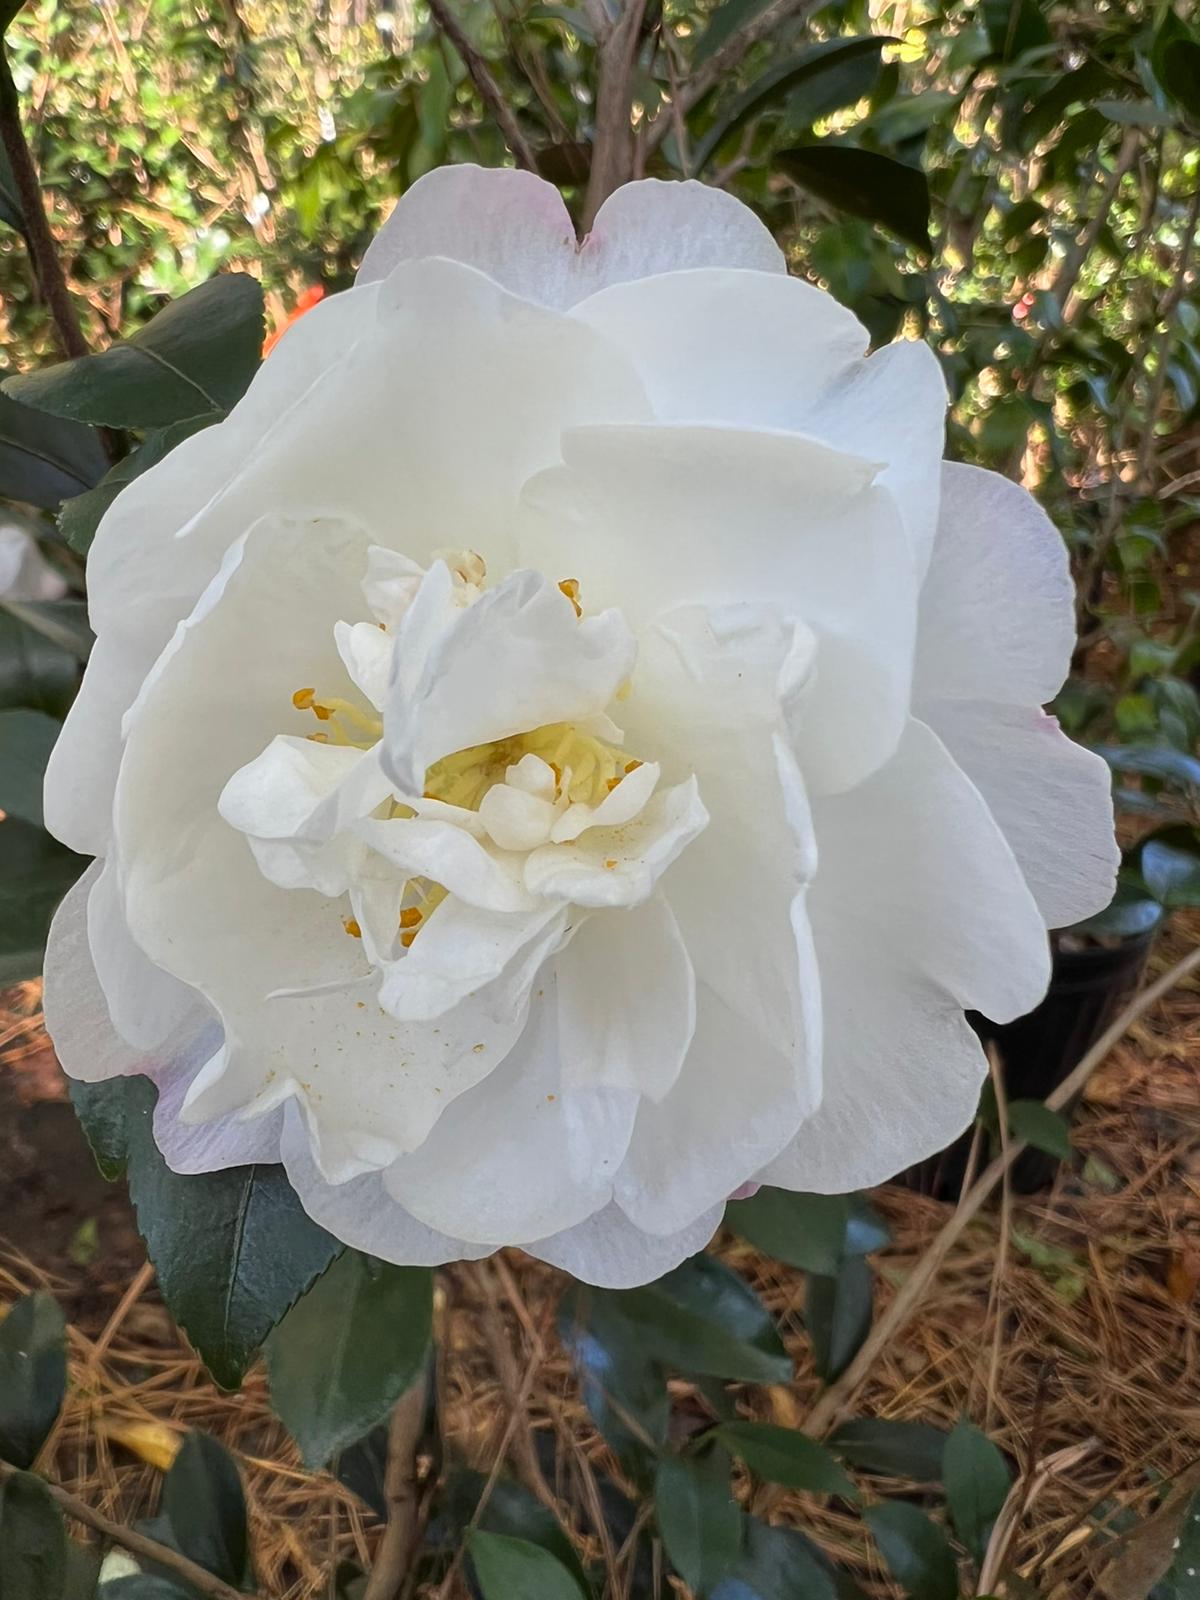 Camellia Autumn Rocket Plant-Stunning White Blooms